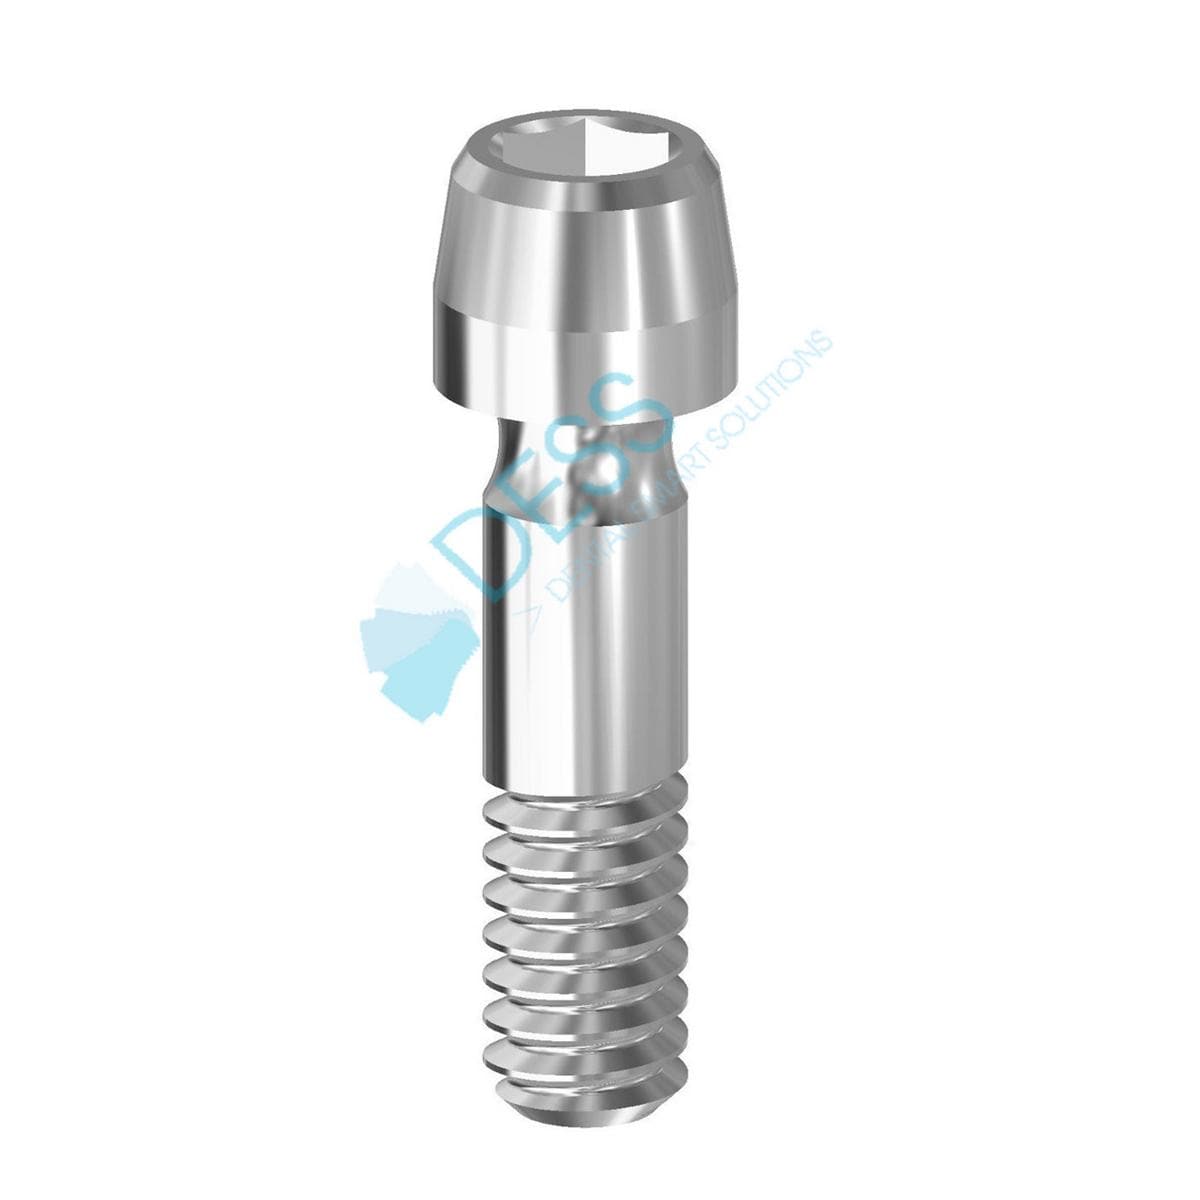 Abutmentschraube auf Implantat - kompatibel mit Astra Tech™ Osseospeed™ - Aqua (RP) Ø 3,5 mm - 4,0 mm, Packung 10 Stück